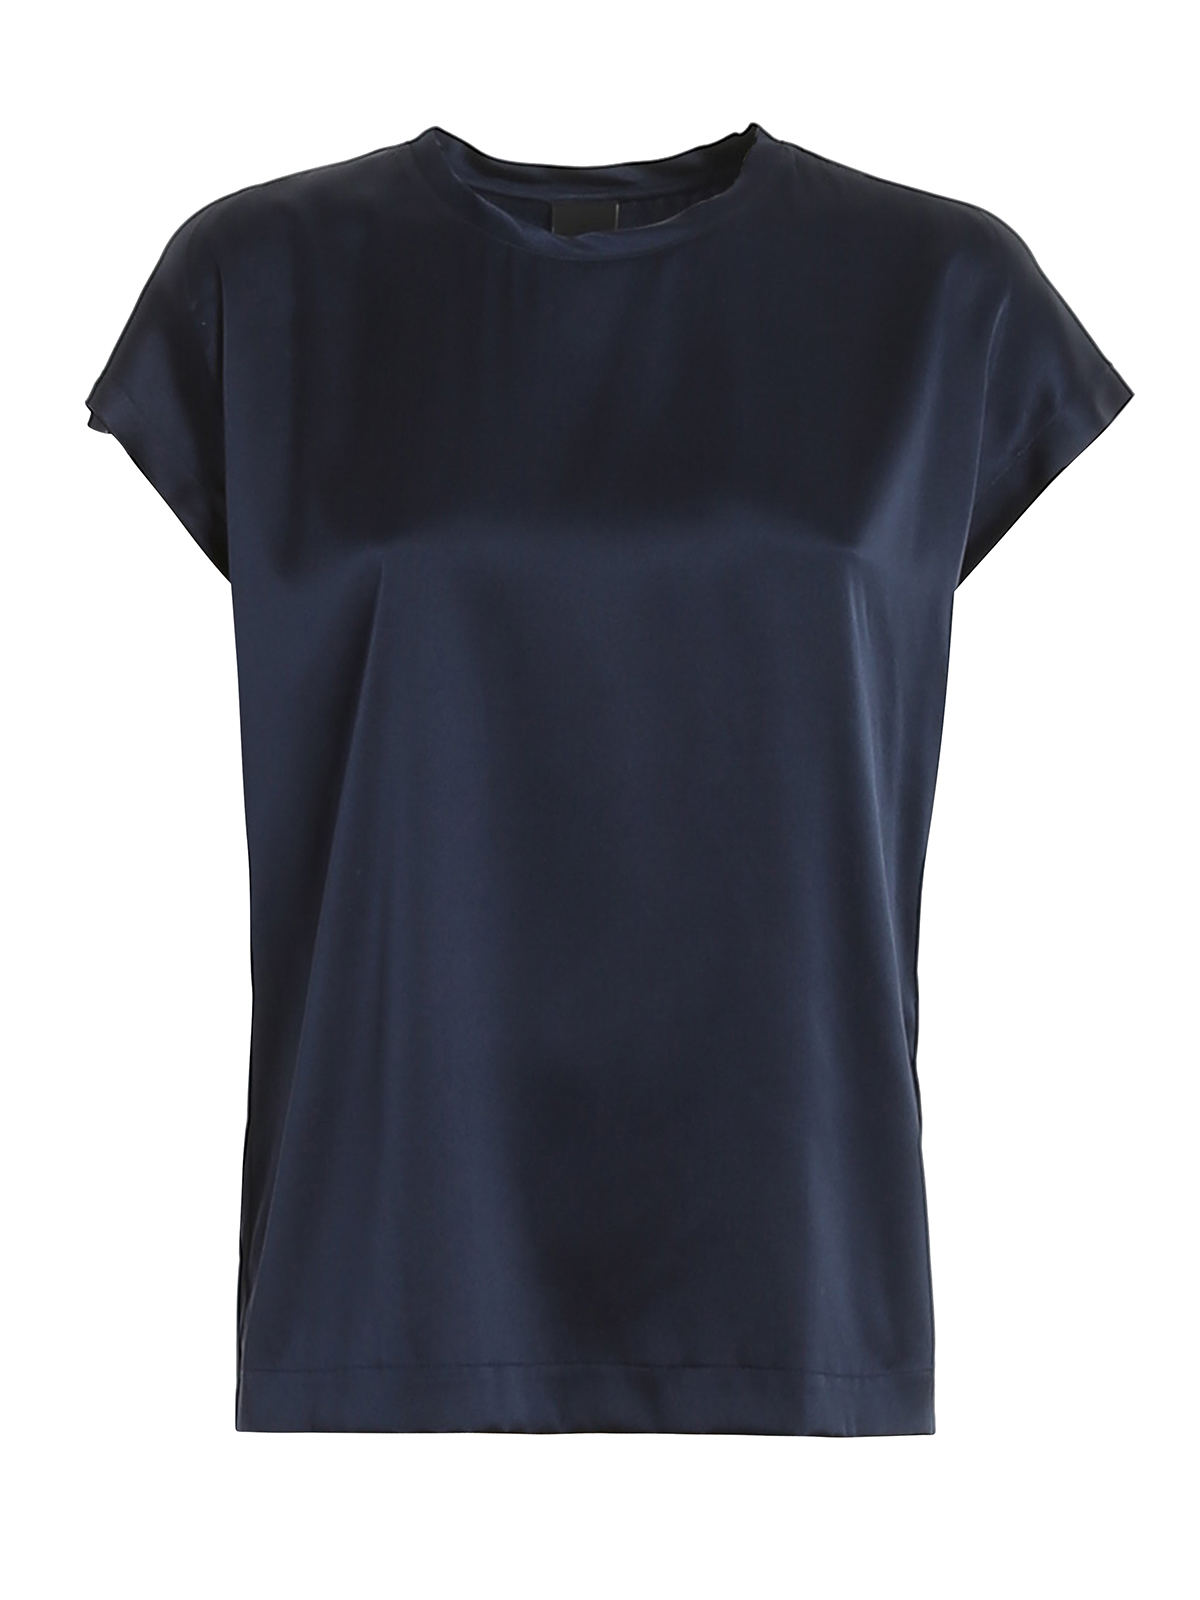 Blouses Pinko - Farisa 18 blouse - 1G1527Y6B1G56 | Shop online at iKRIX